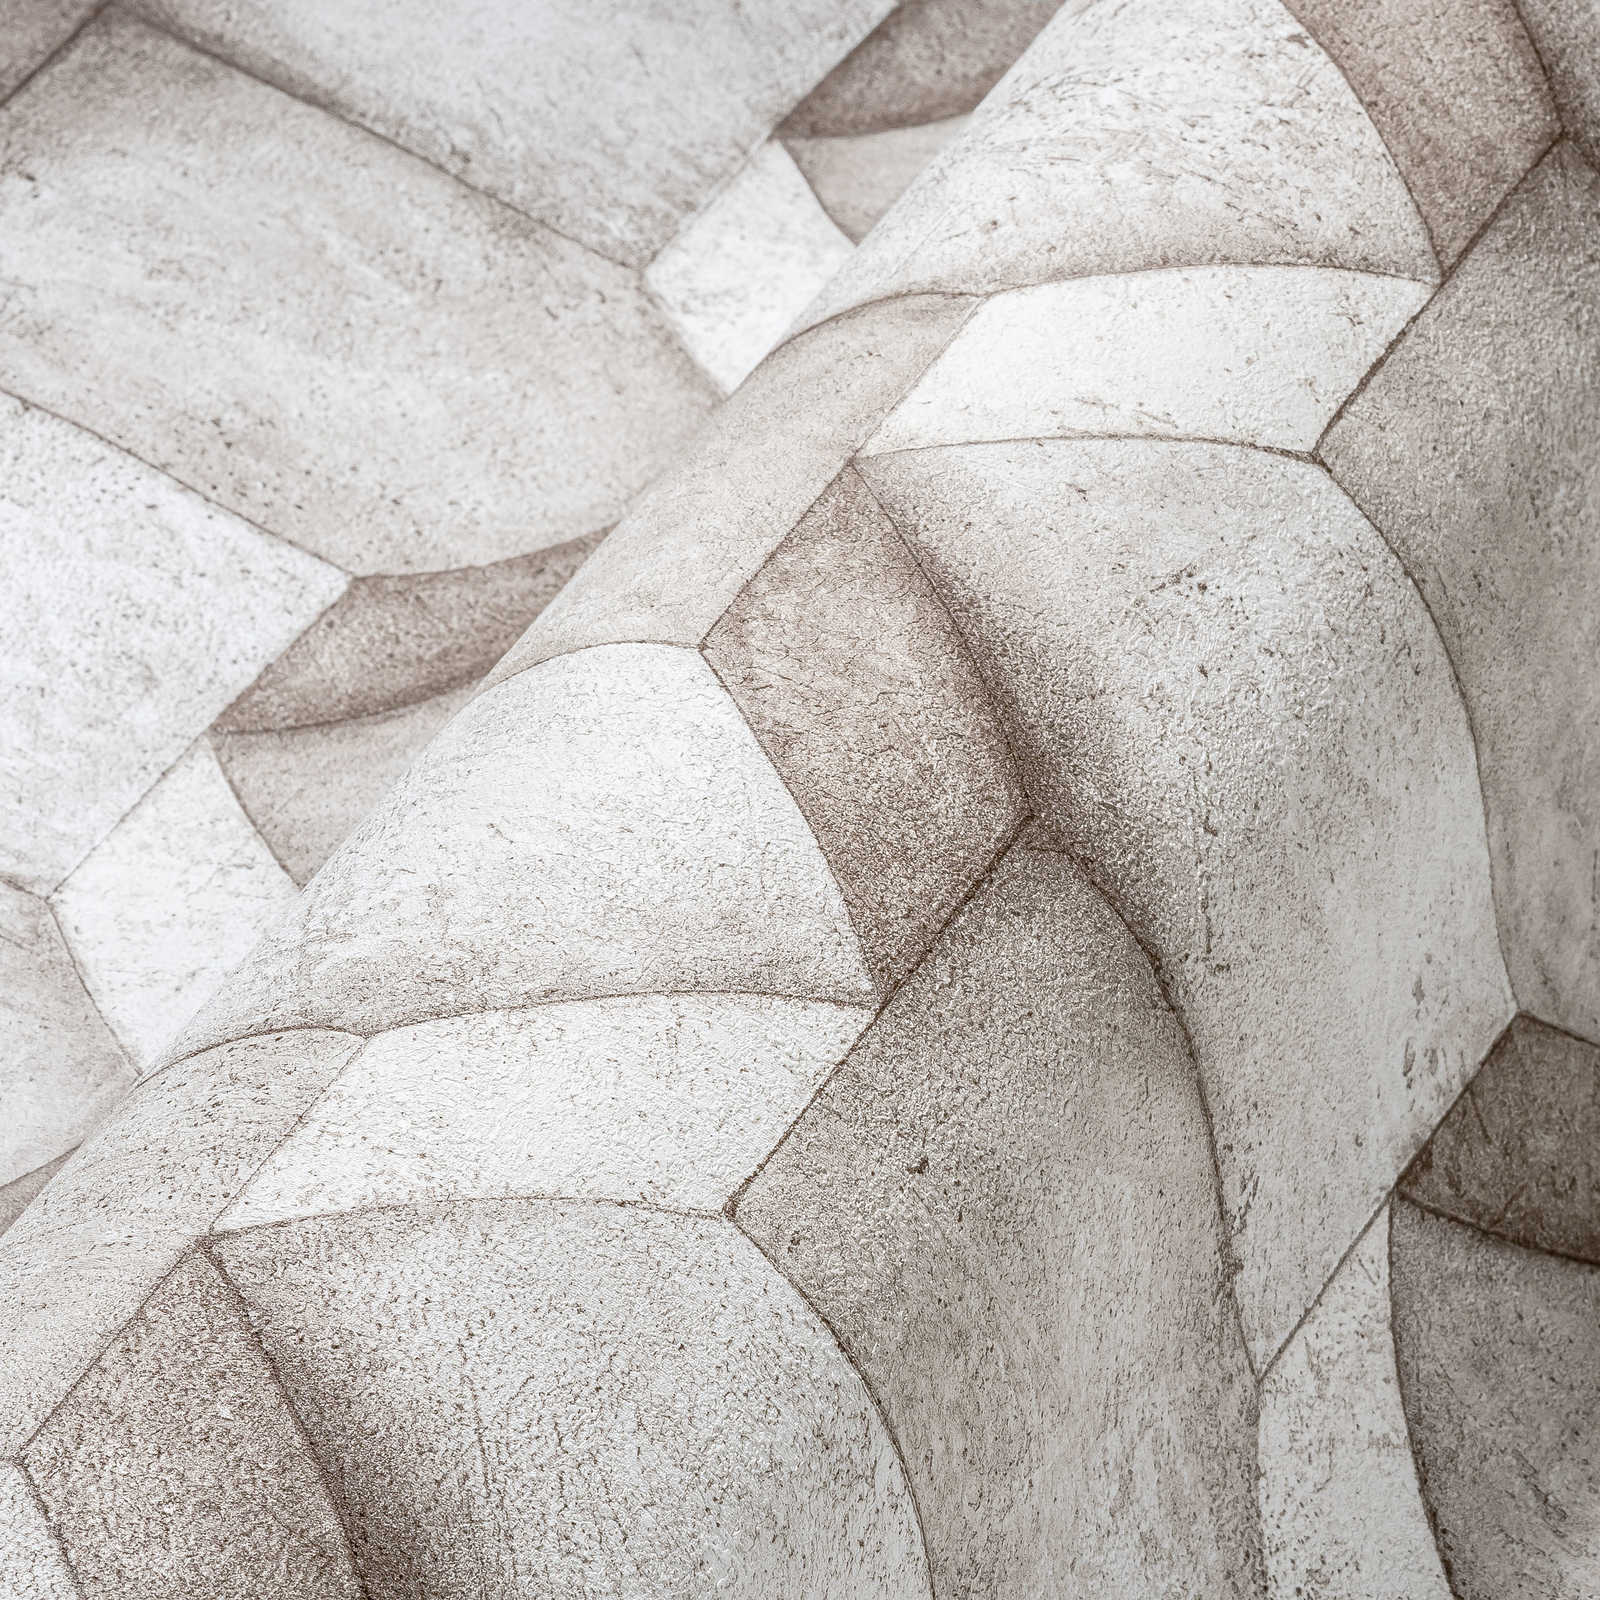             3D Tapete Greige mit Betonoptik Design – Grau, Beige
        